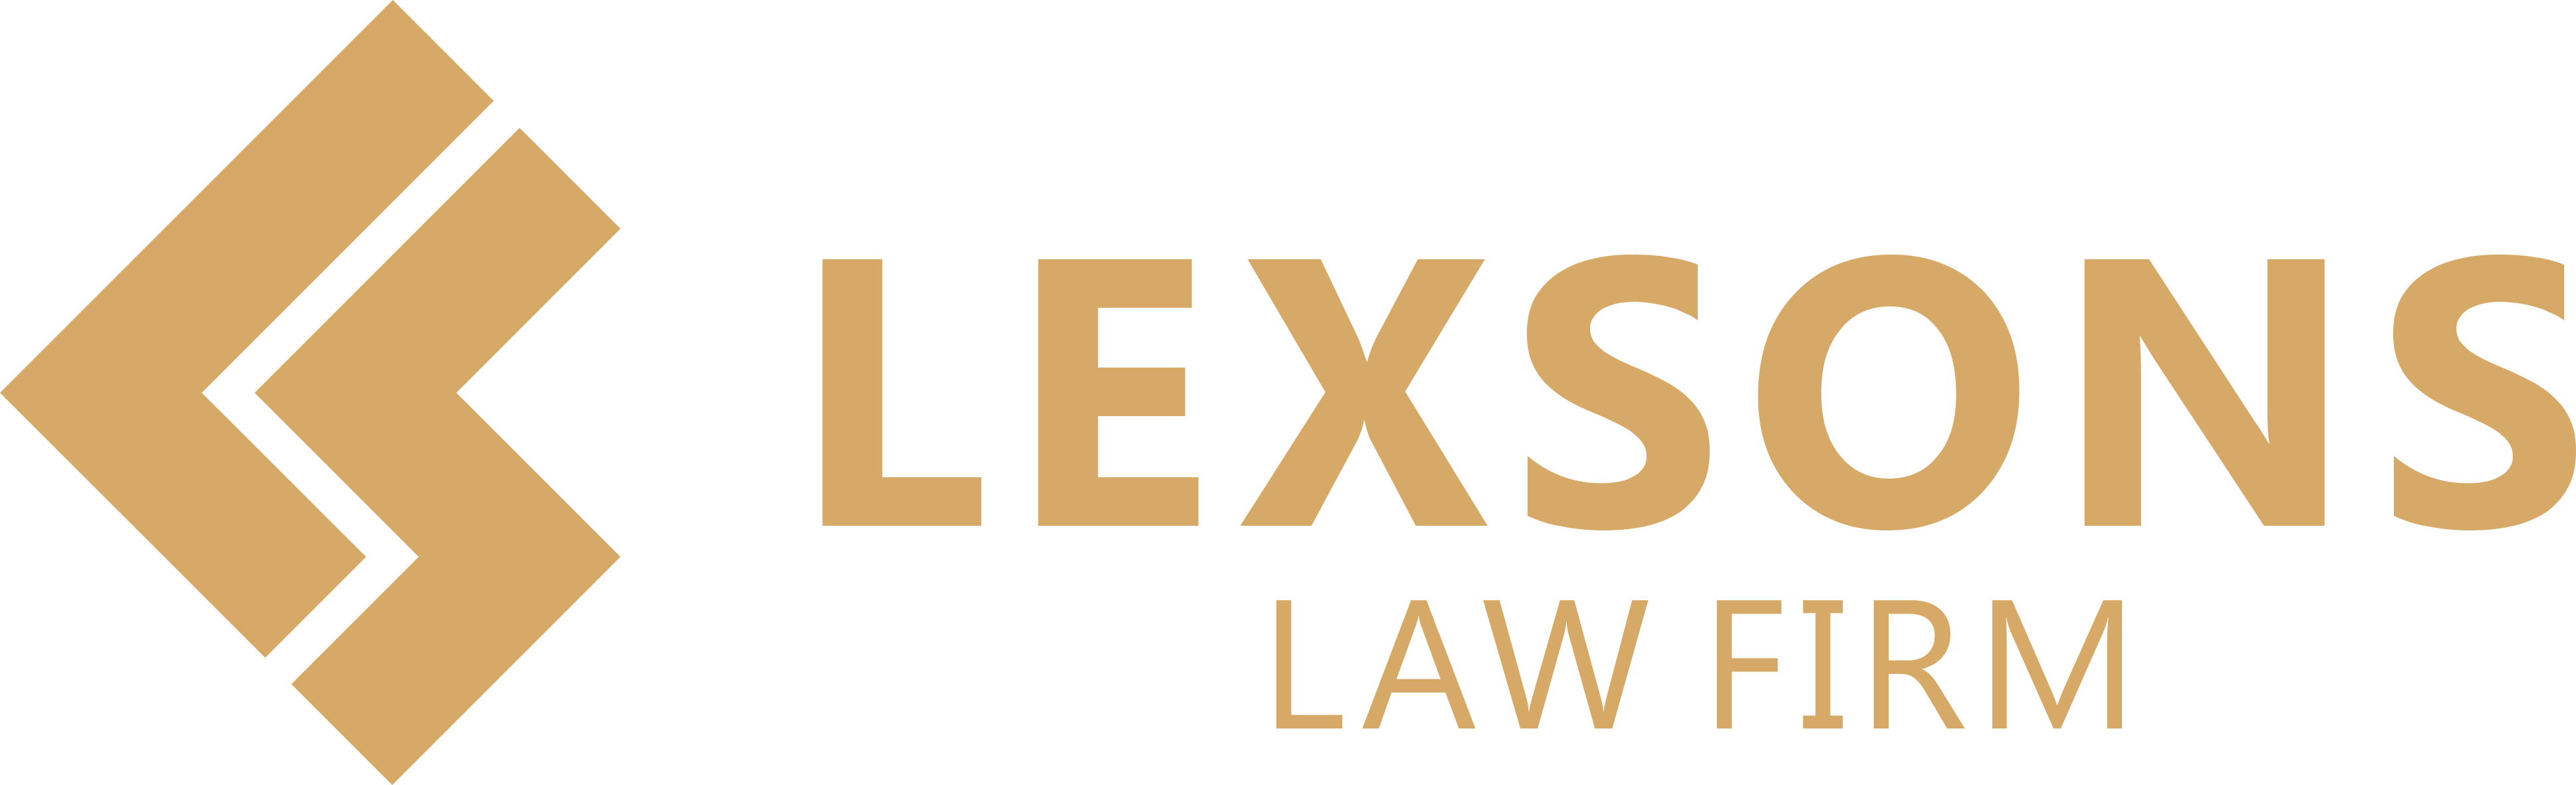 Lexsons Law Firm - Lexsons Law Firm (3875x1181)